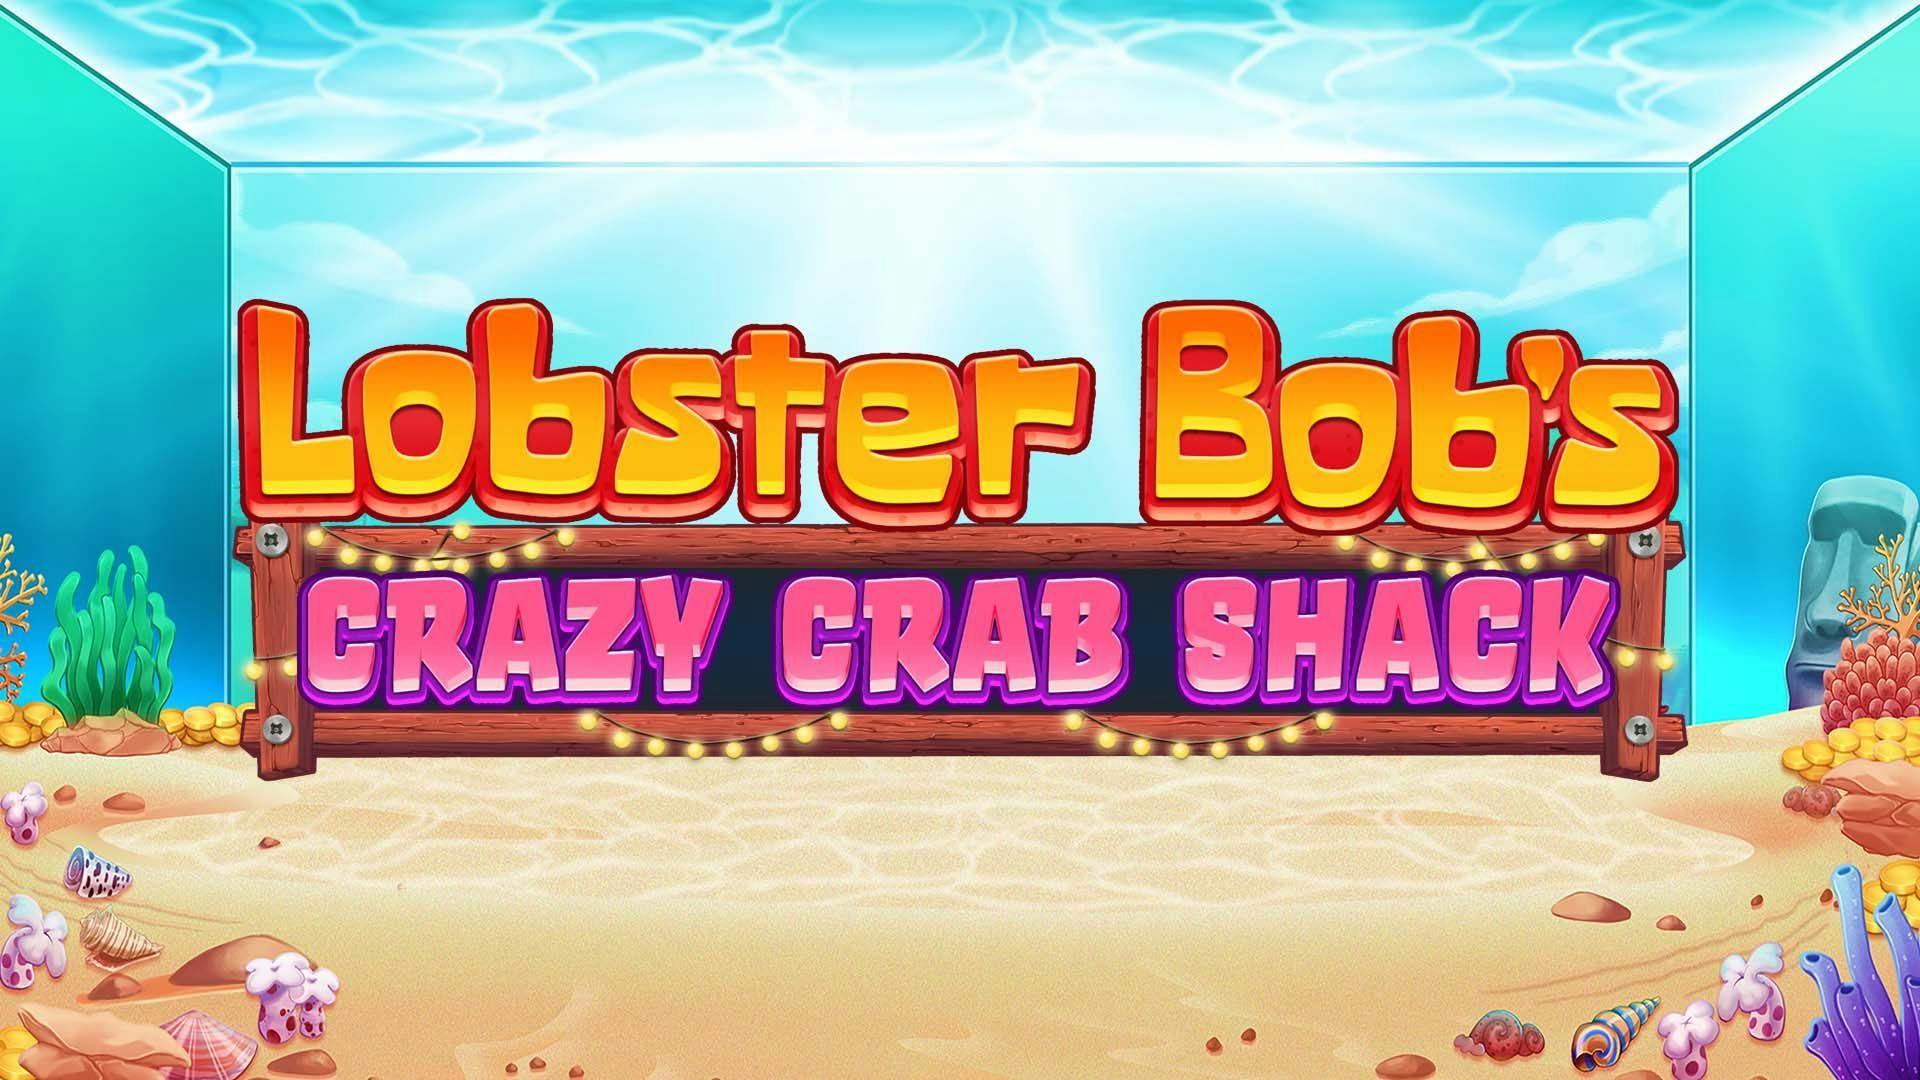 Lobster Bob's Crazy Crab Shack Slot Machine Online Free Game Play